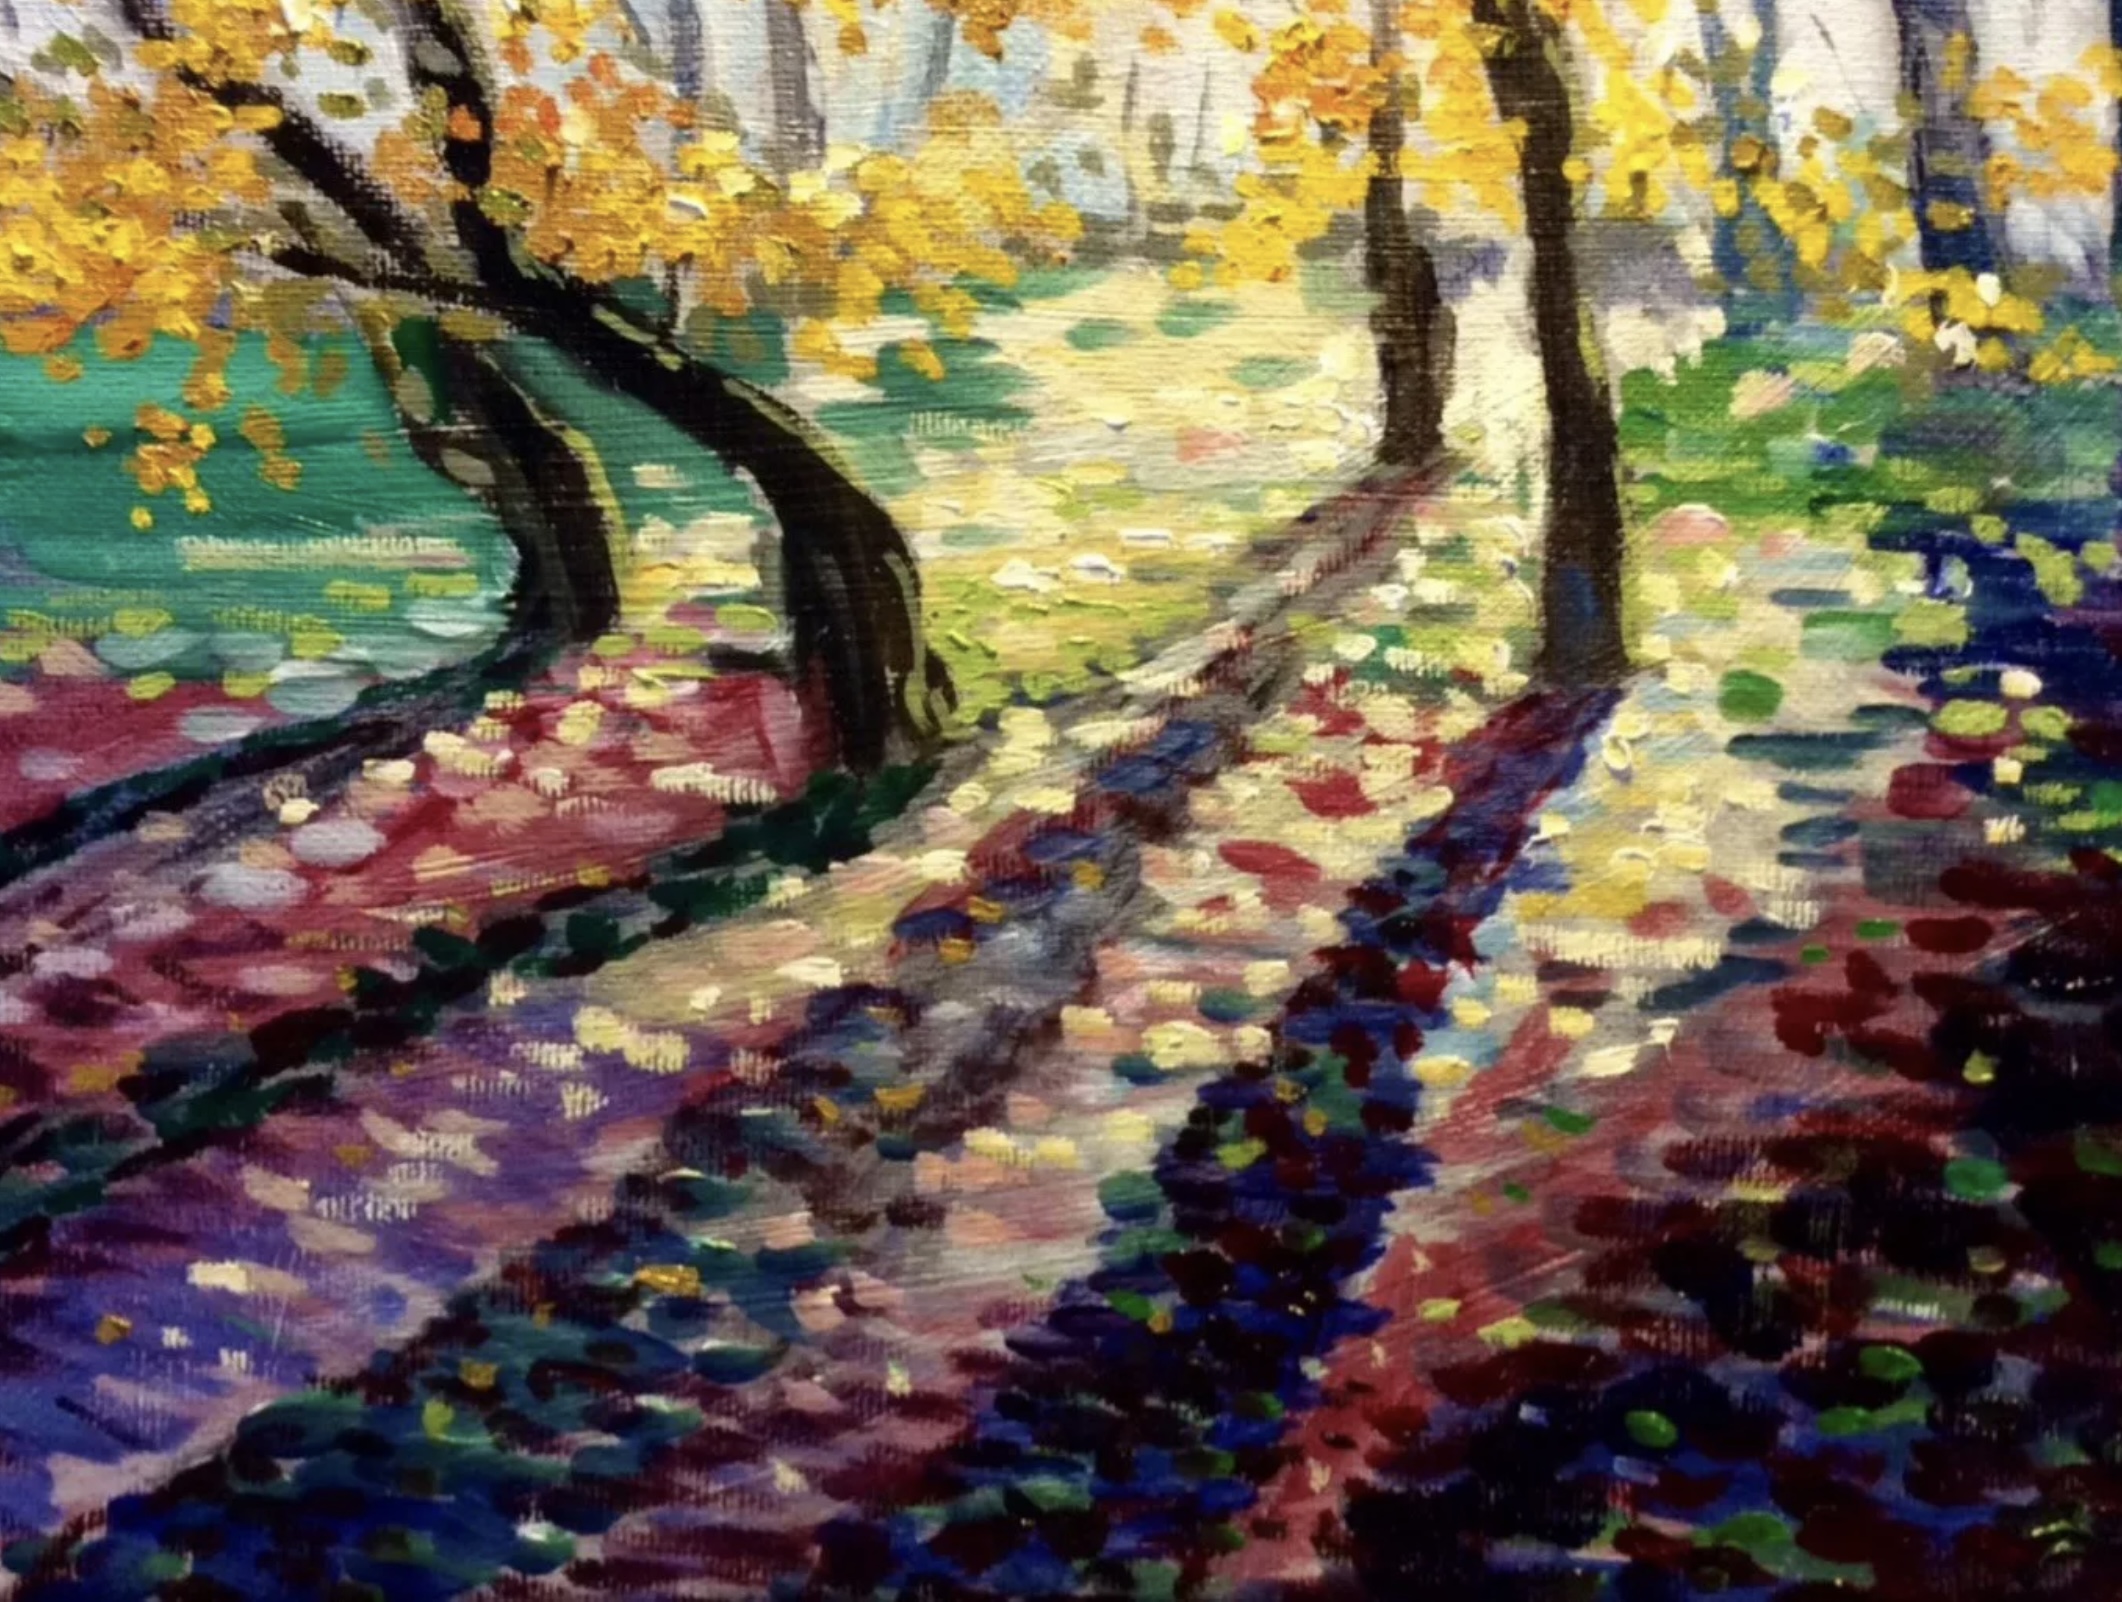 Twilight and Shadows Impressionist Art by Hilary J. England, American artist